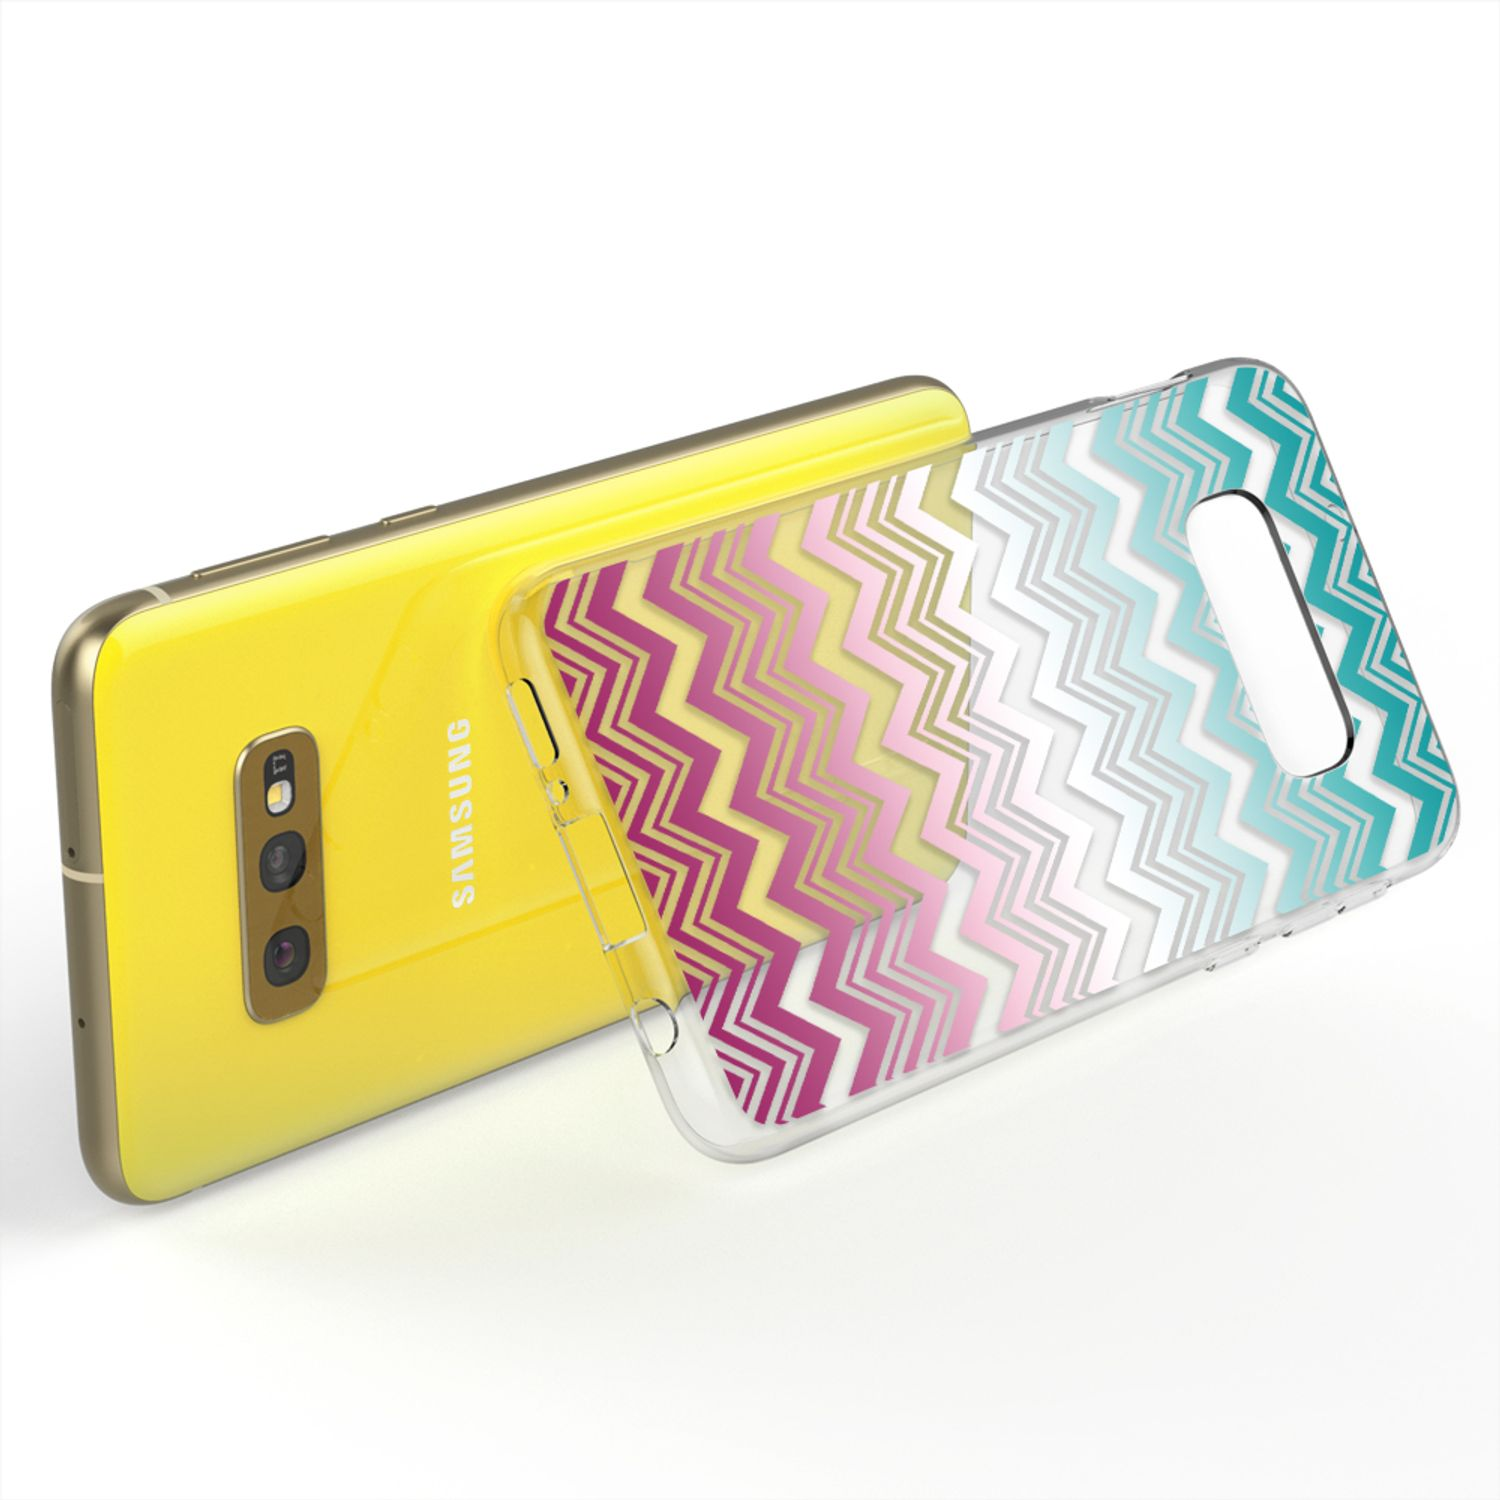 Samsung, Motiv Backcover, NALIA Hülle, S10e, Silikon Mehrfarbig Galaxy